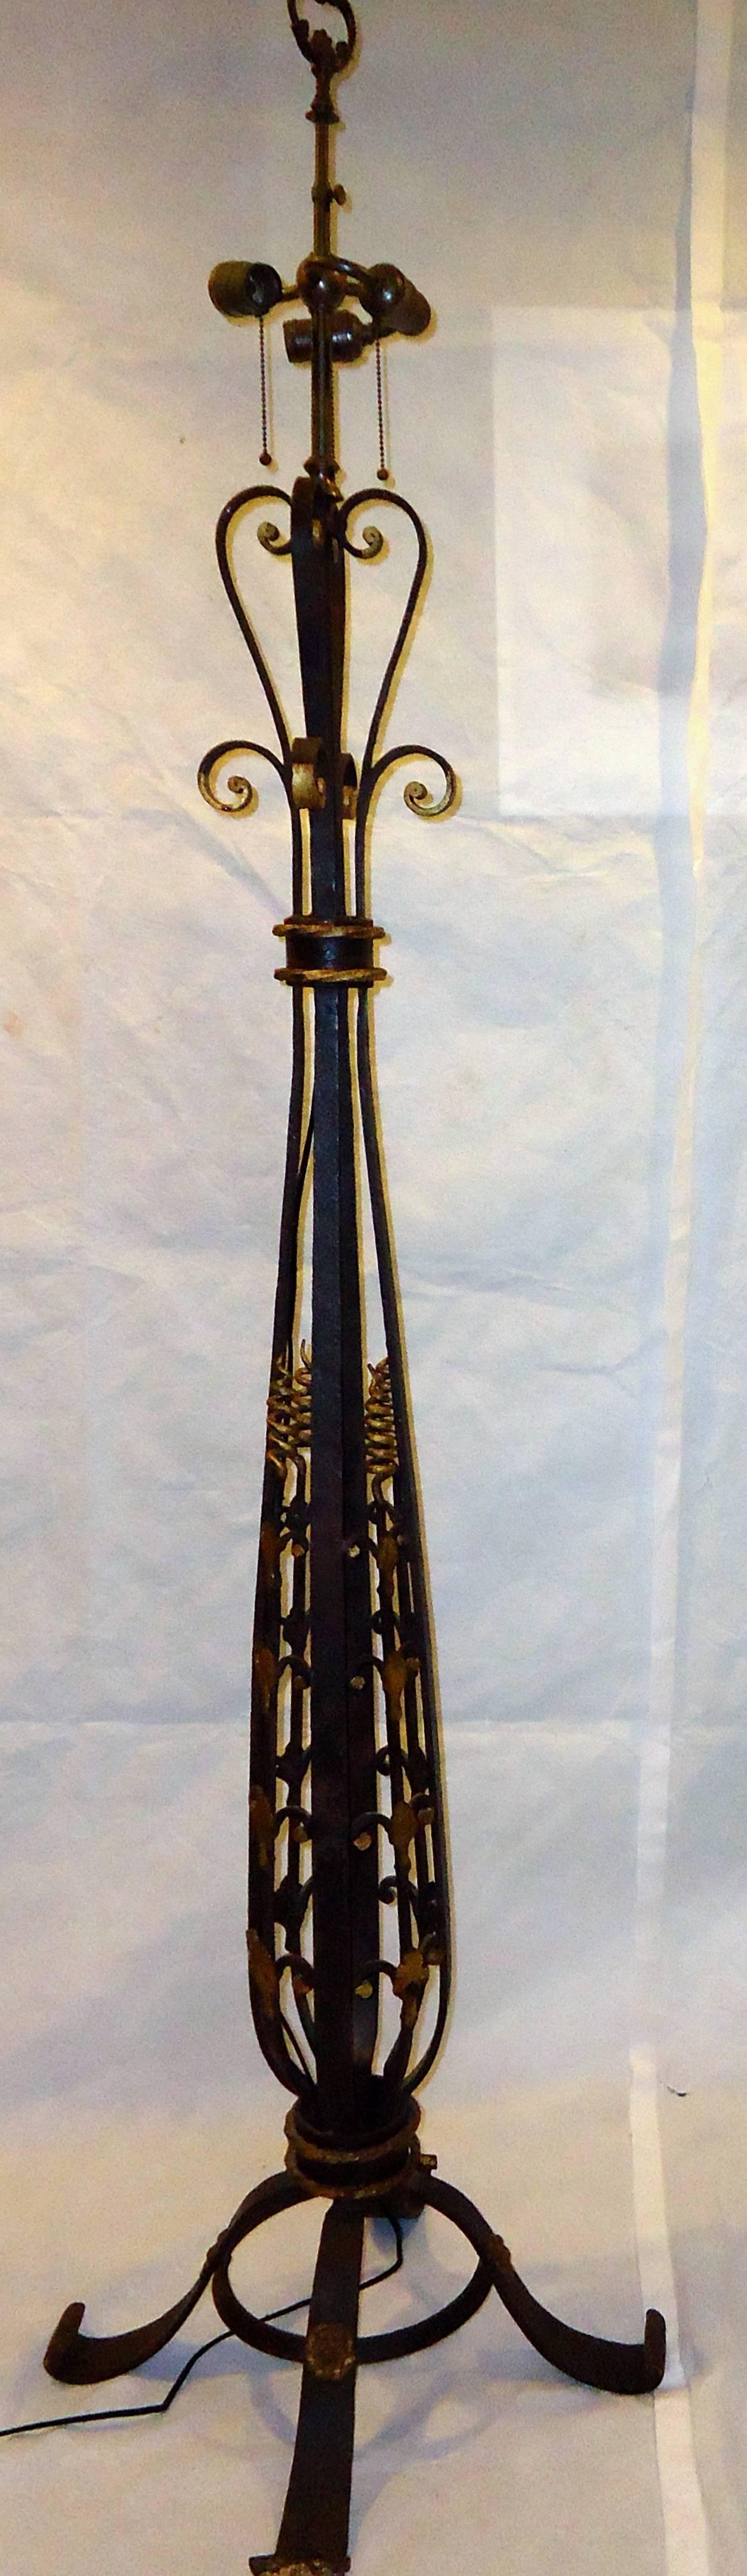 American Empire Wrought Iron Floor Lamp, circa 1910 For Sale 5